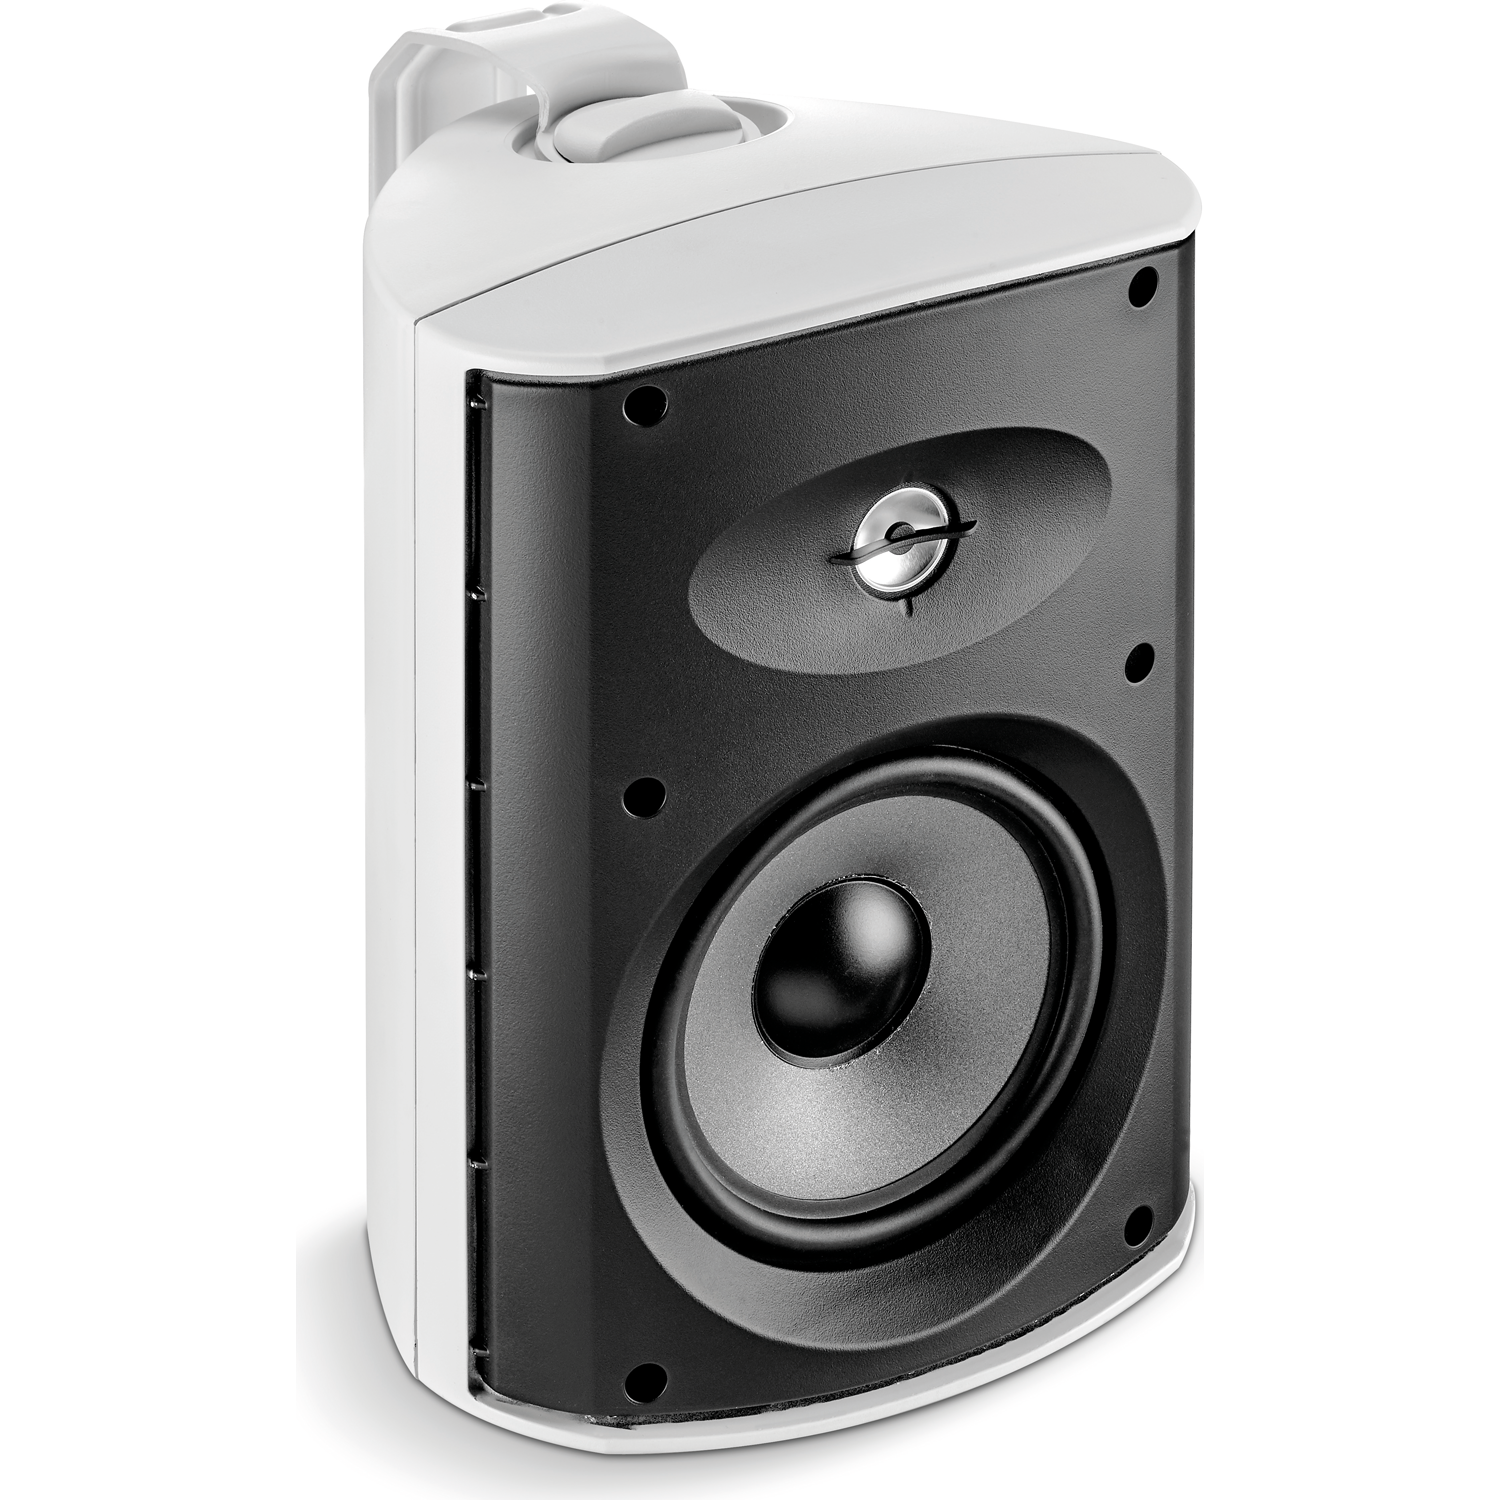 ontsnappen Bestudeer mechanisme FOCAL 100 OD6 EACH 6.5" Outdoor IP66 Rated speakers WHITE | Accessories4less